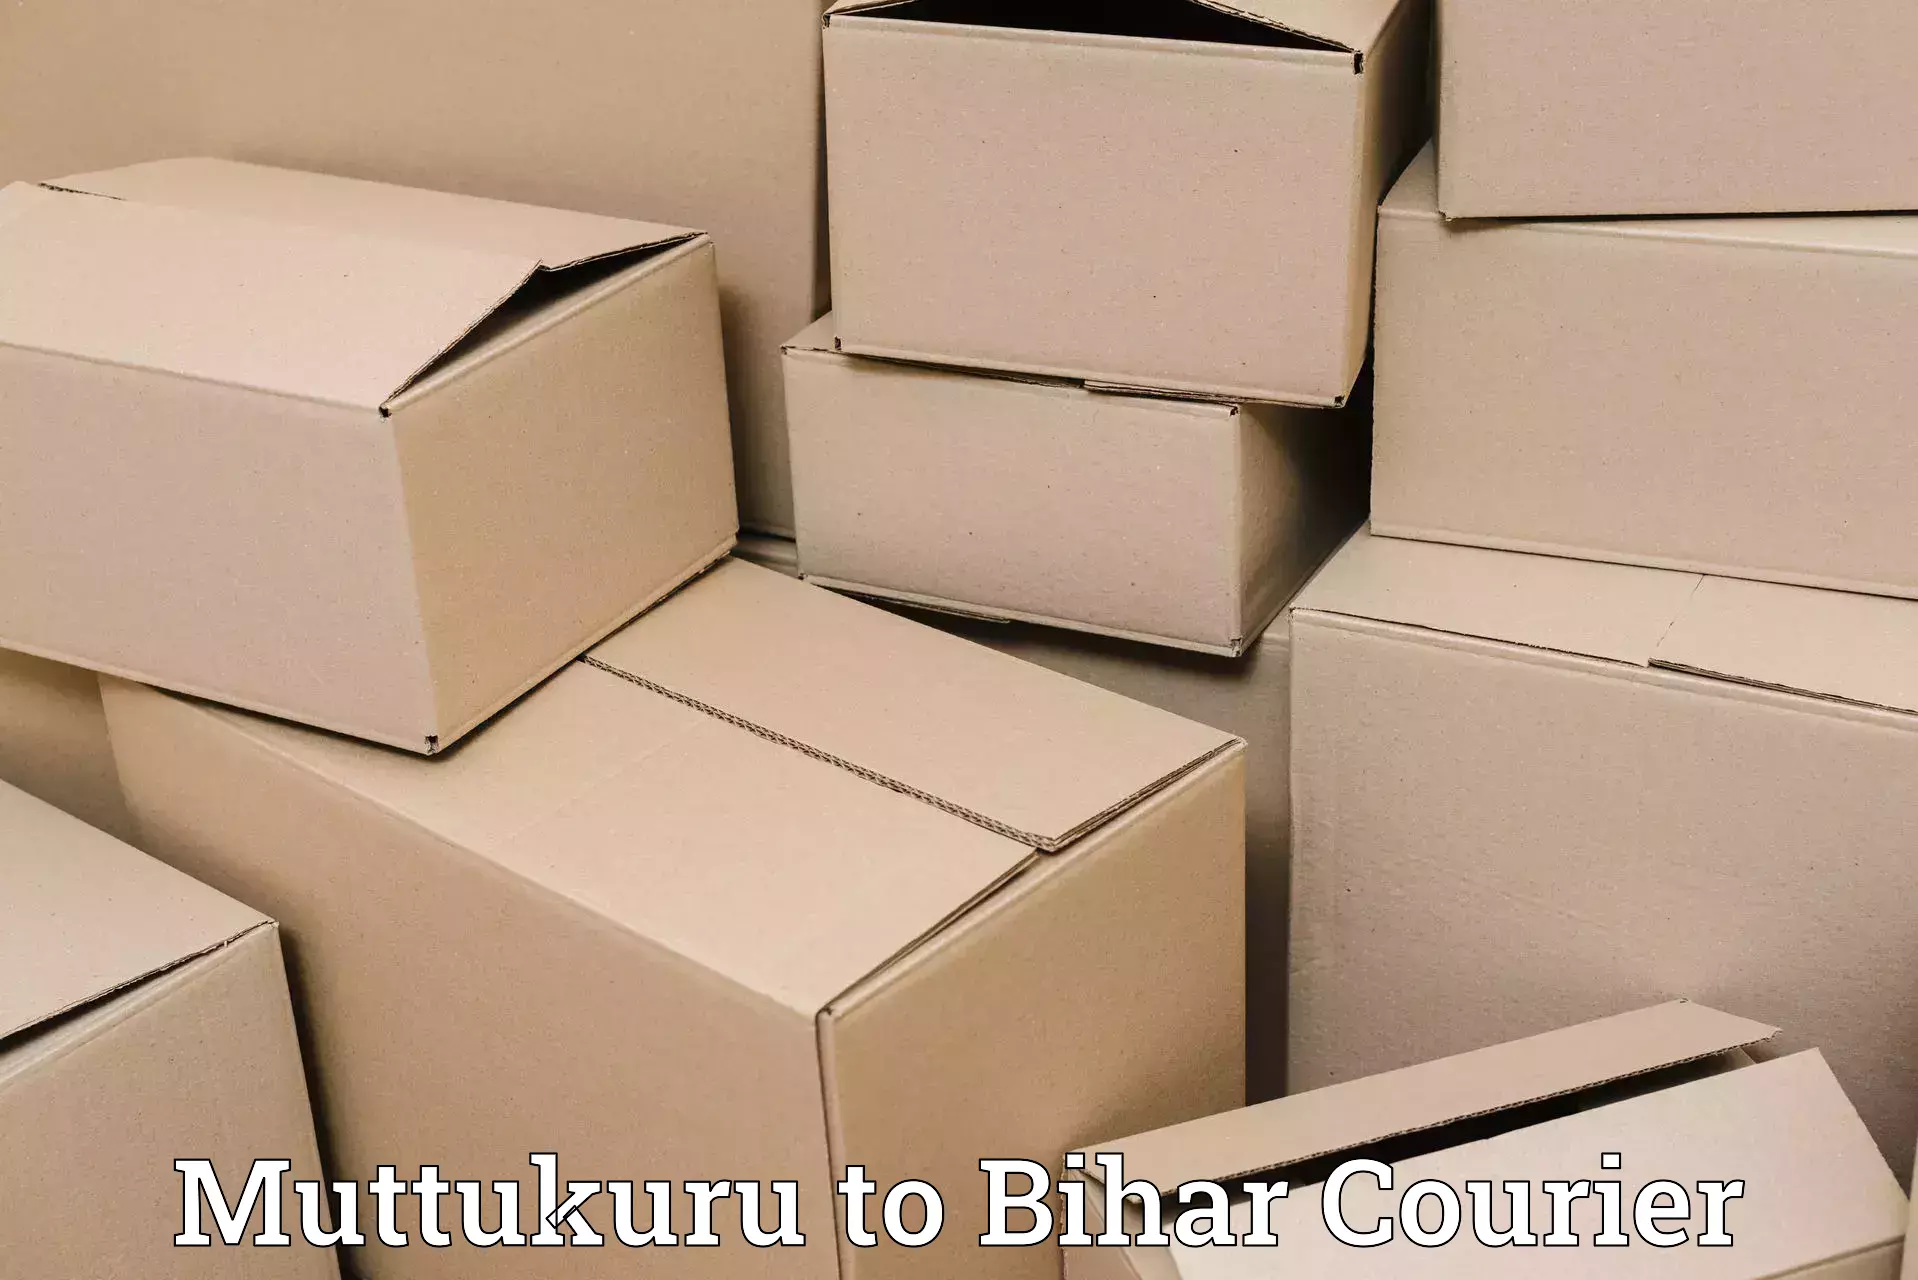 Easy access courier services Muttukuru to Bihar